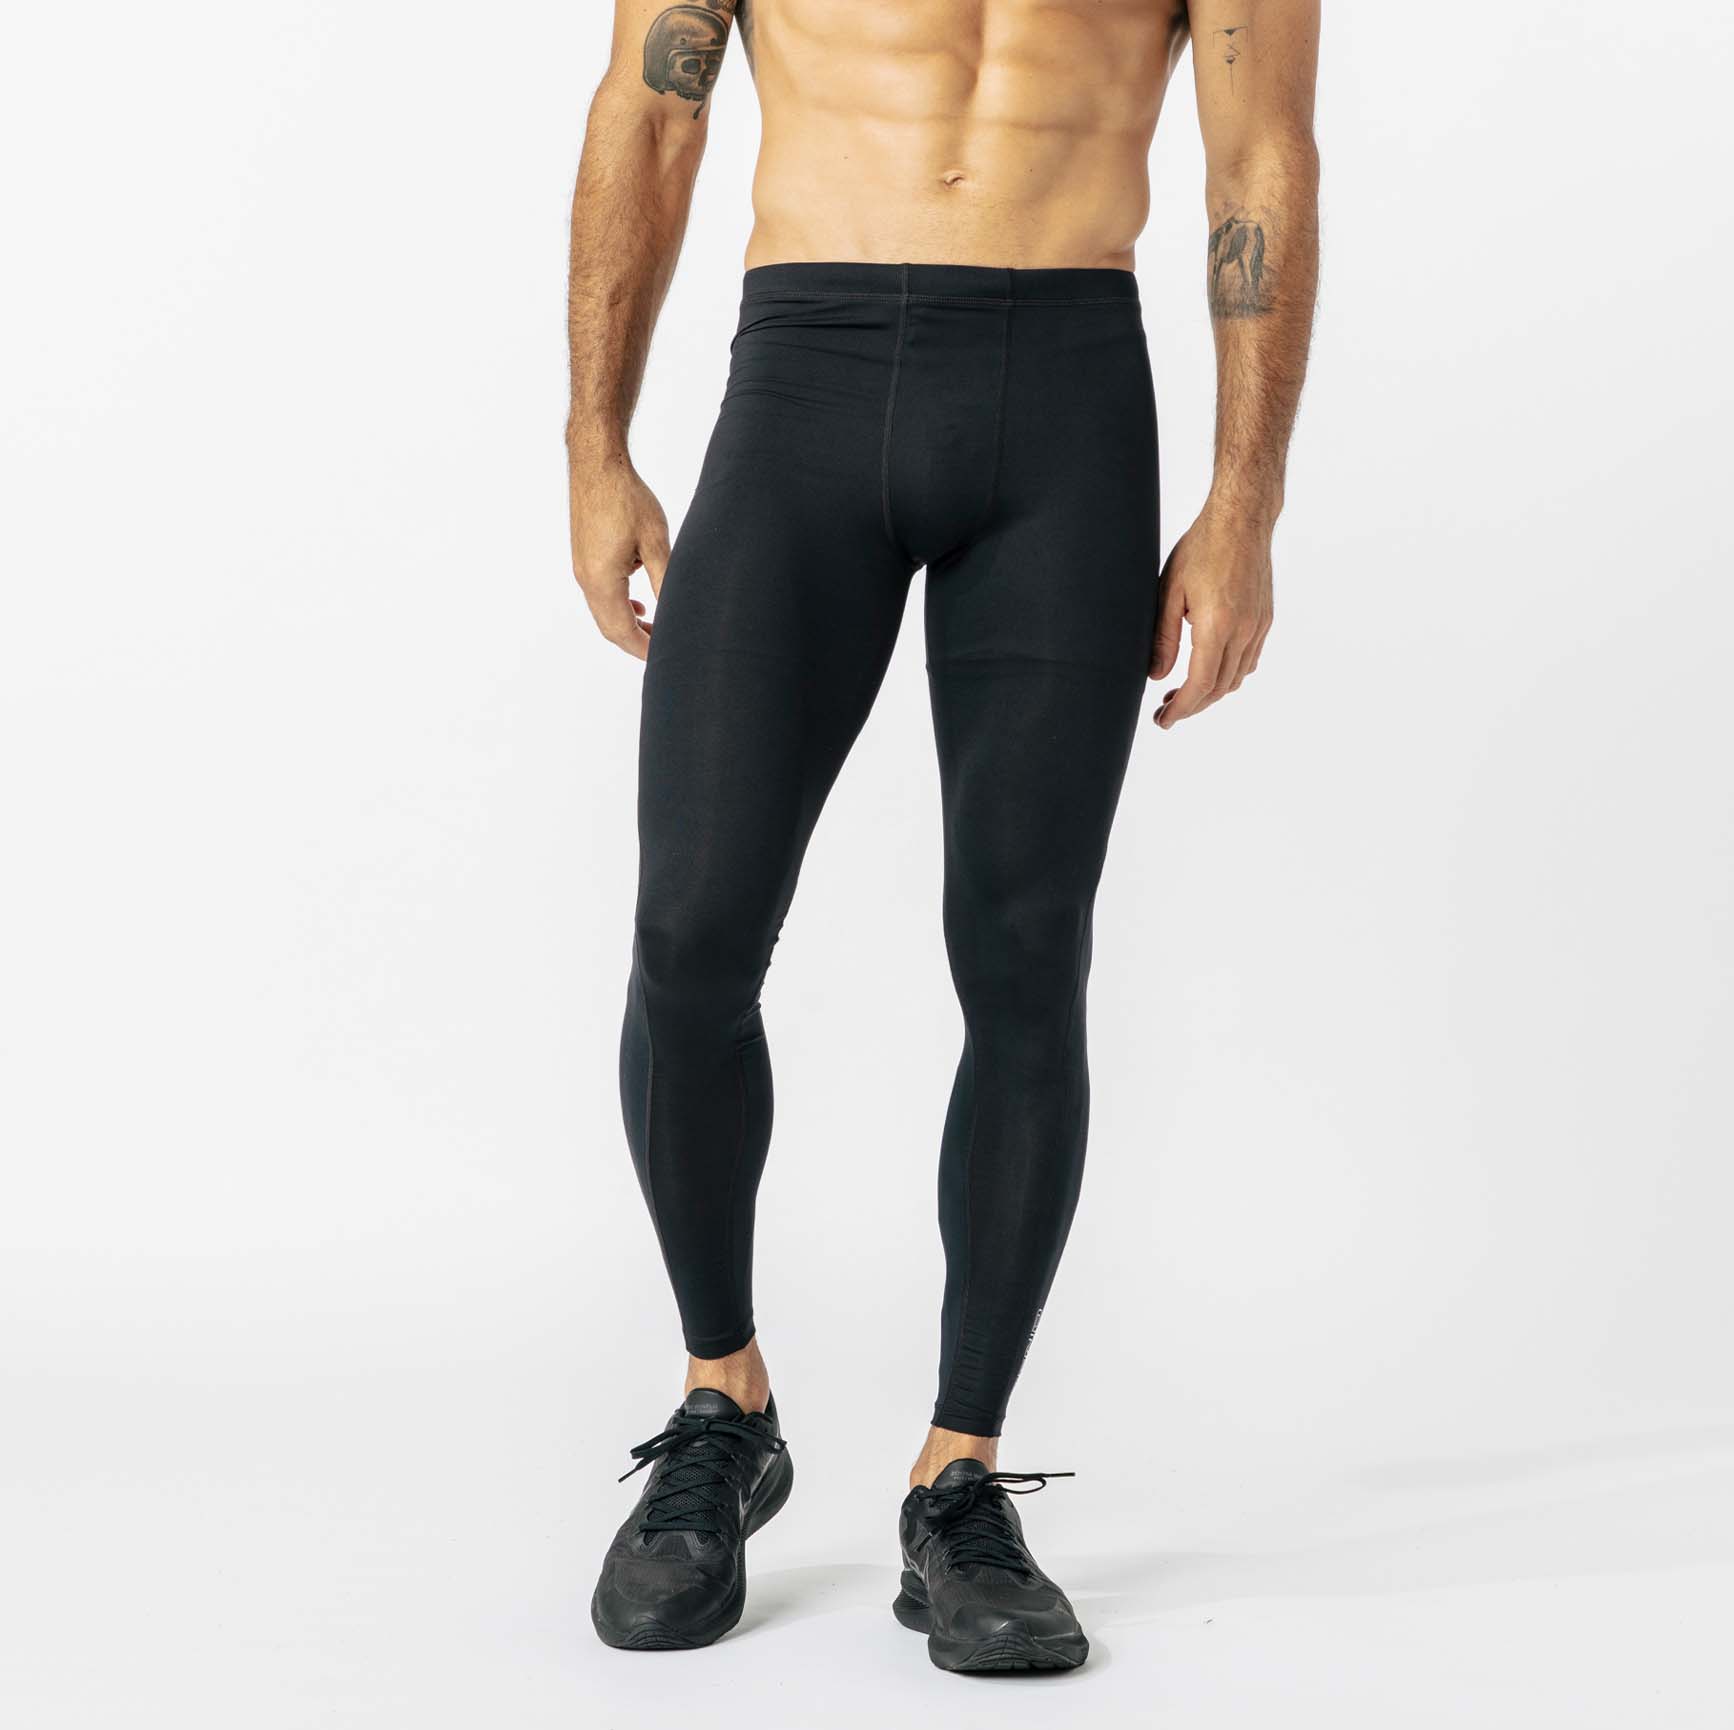 Legging pants. Tights. Men's 100% Cotton Thermal Lose